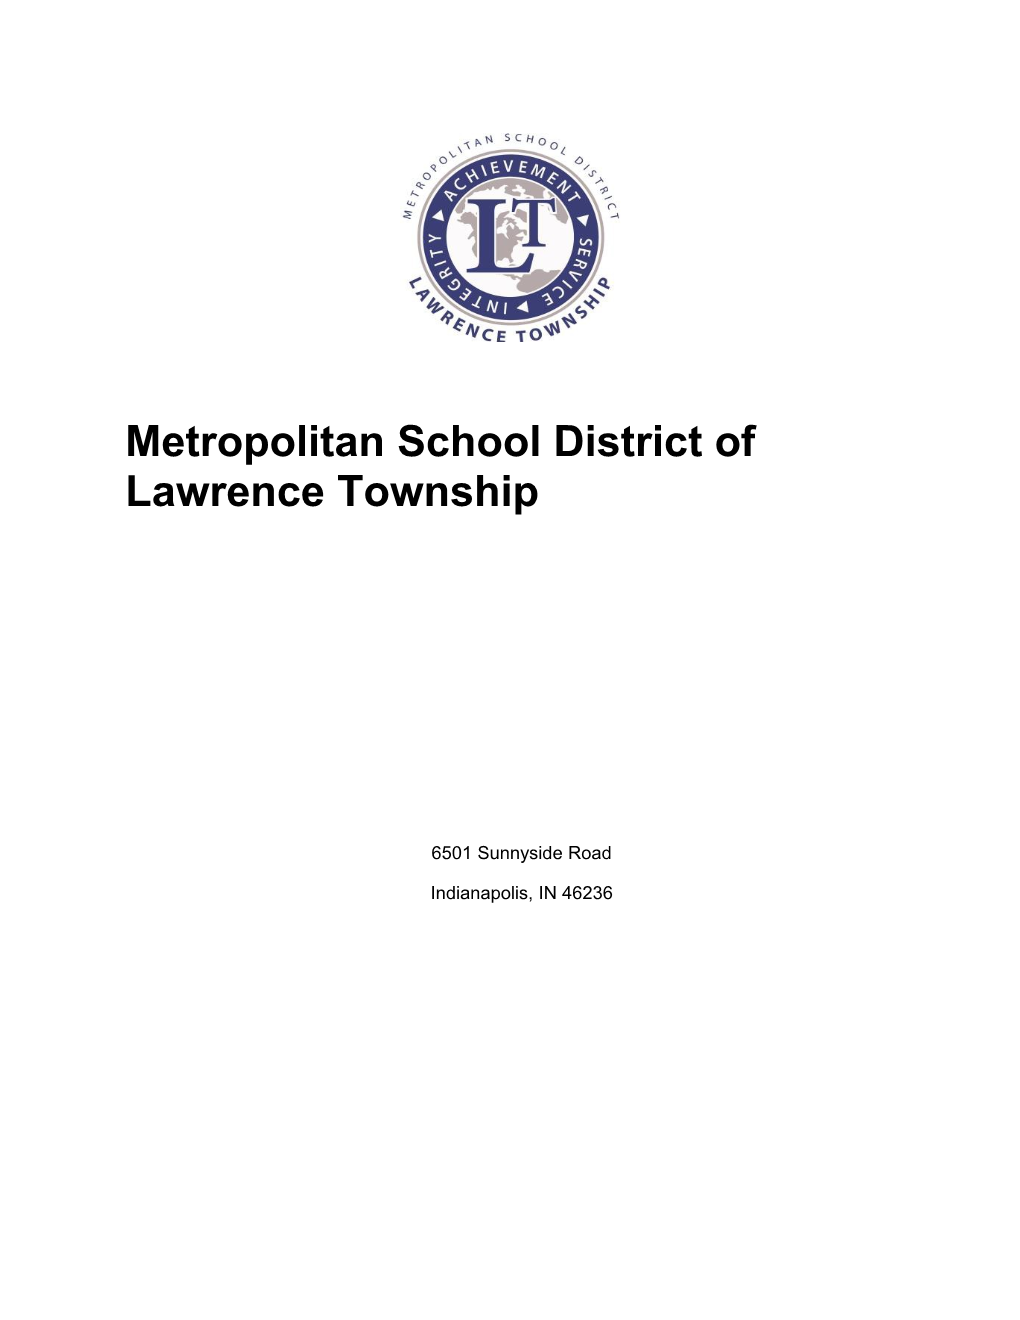 Metropolitan School District of Lawrence Township